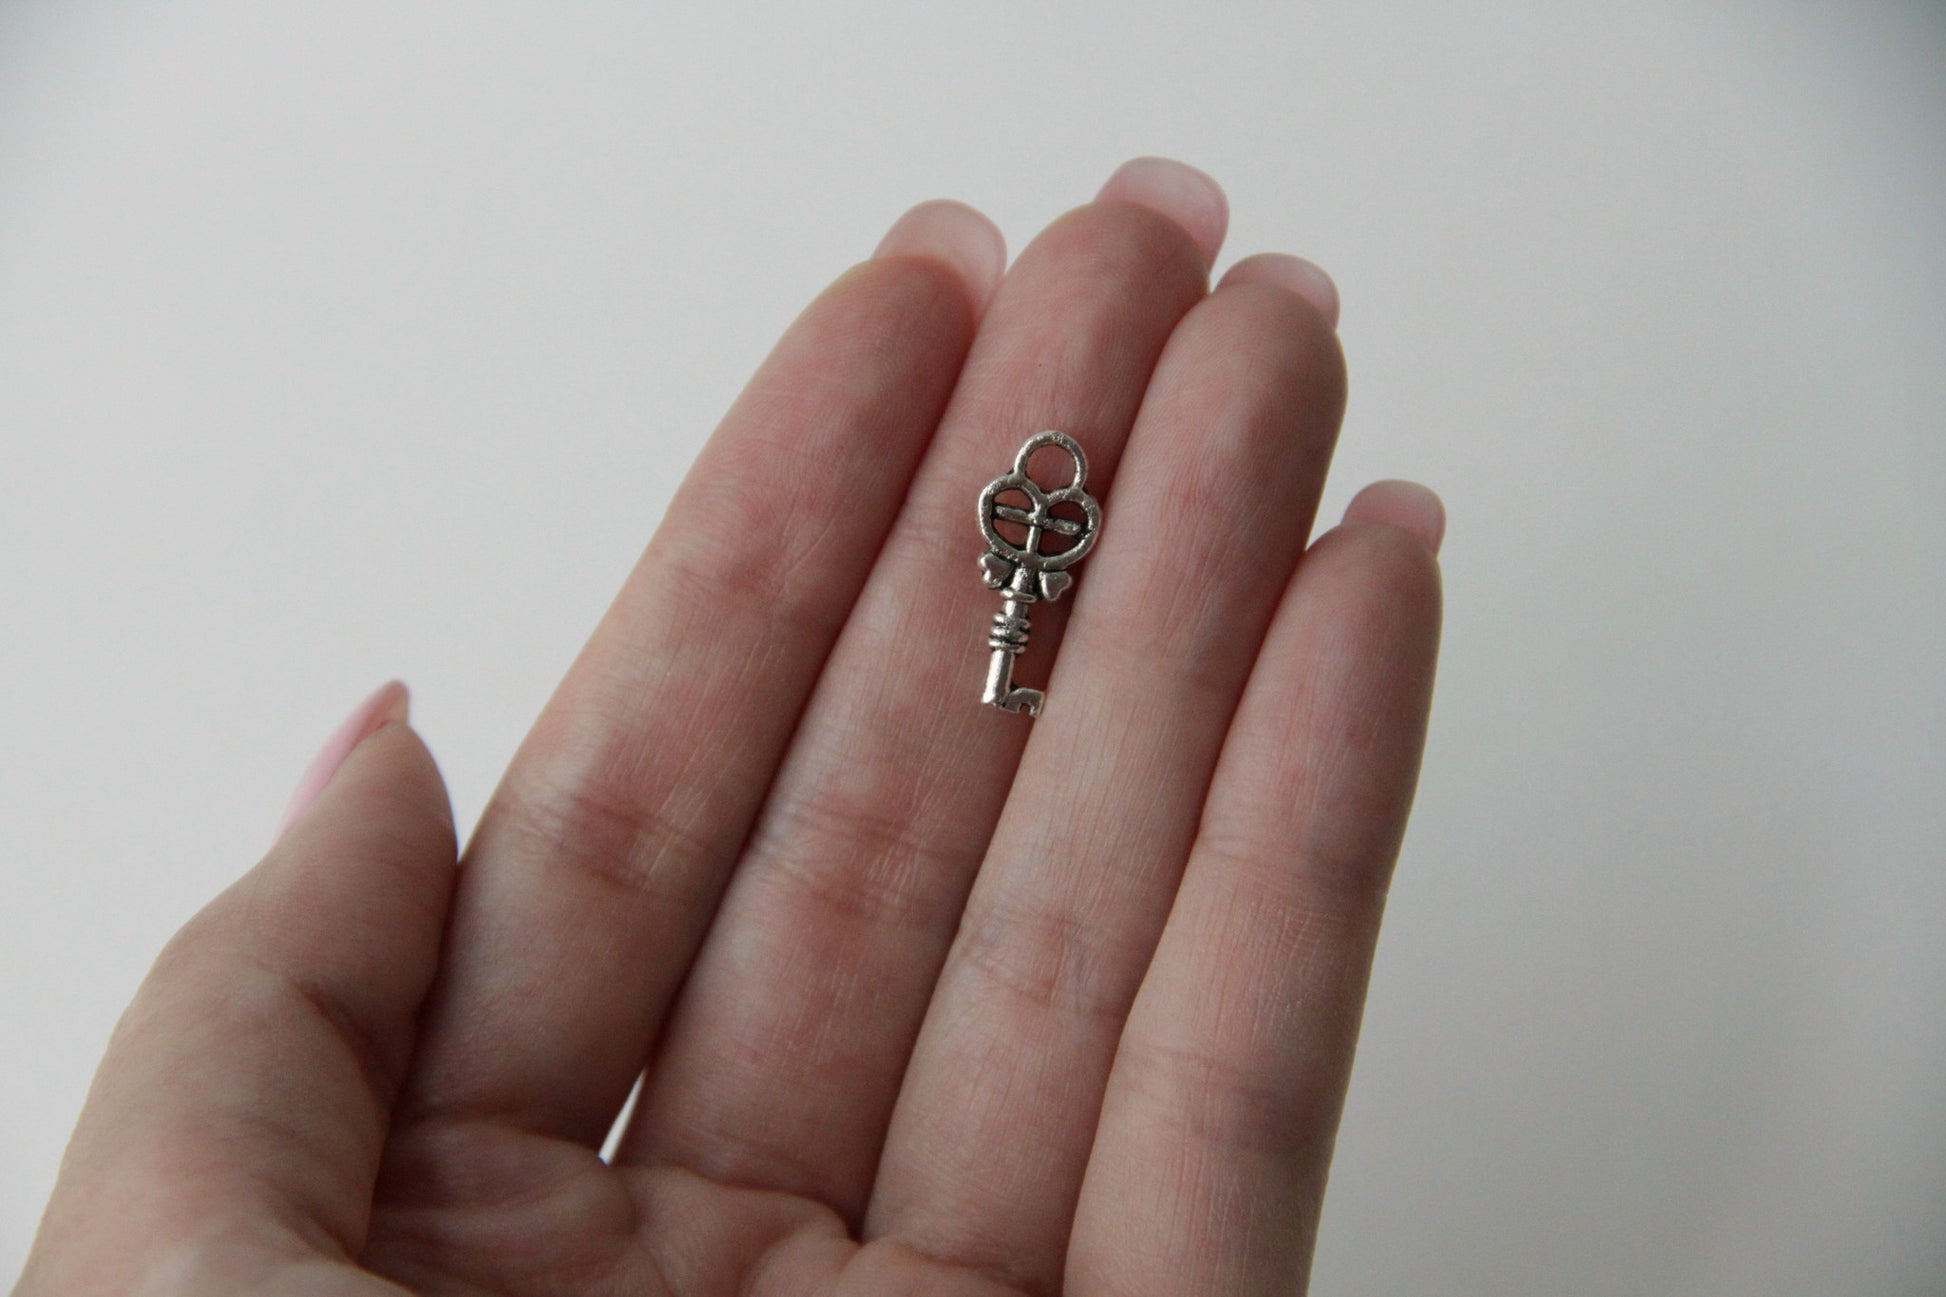 Charm - Heart Shape Key, Antique Silver - KEY Handmade
 - 2